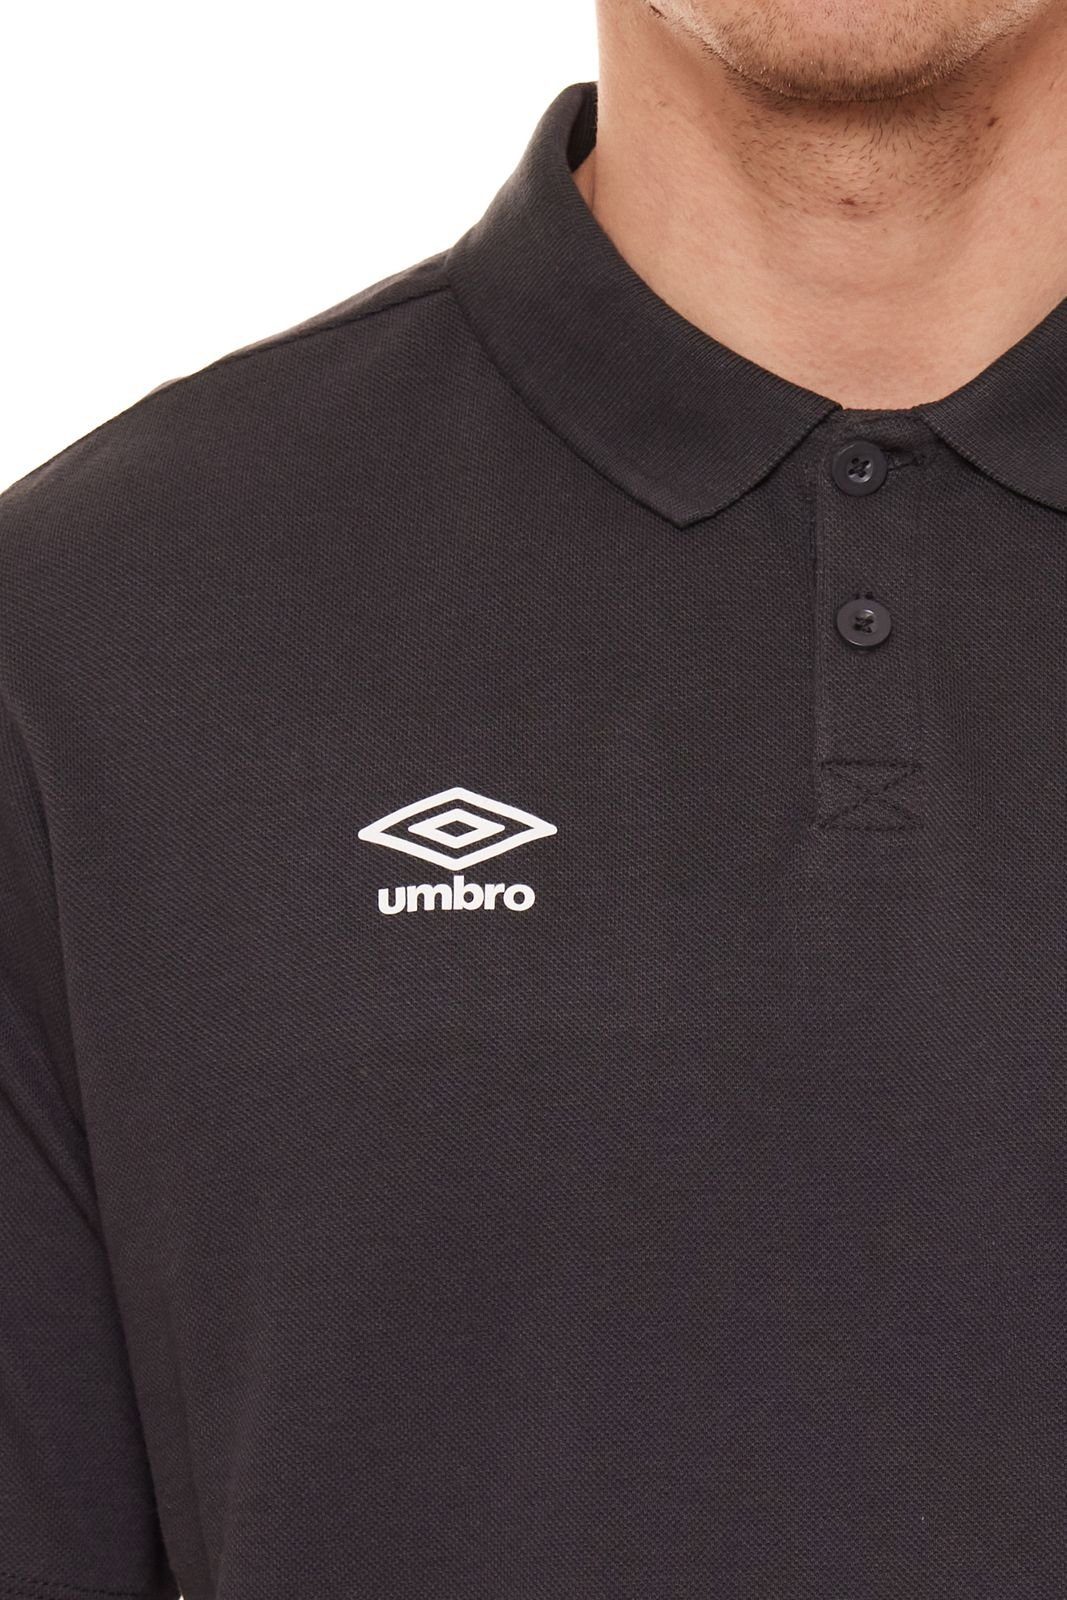 Umbro Rundhalsshirt umbro Golf-Shirt Dunkelgrau Essential Herren komfortables Polohemd Polo-Shirt UMTM0323-825 Club